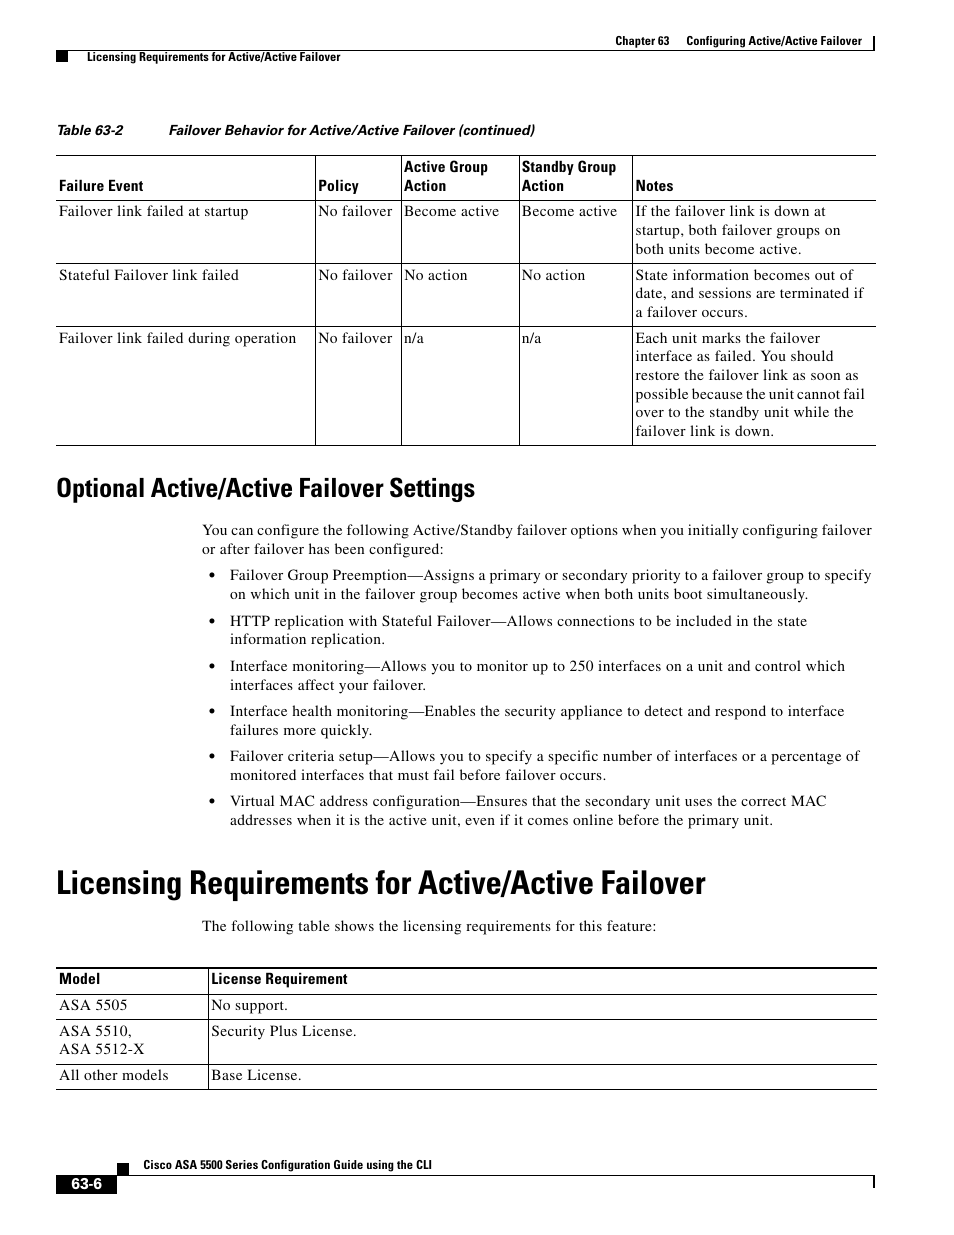 Optional active/active failover settings, Licensing requirements for active/active failover | Cisco ASA 5505 User Manual | Page 1330 / 1994